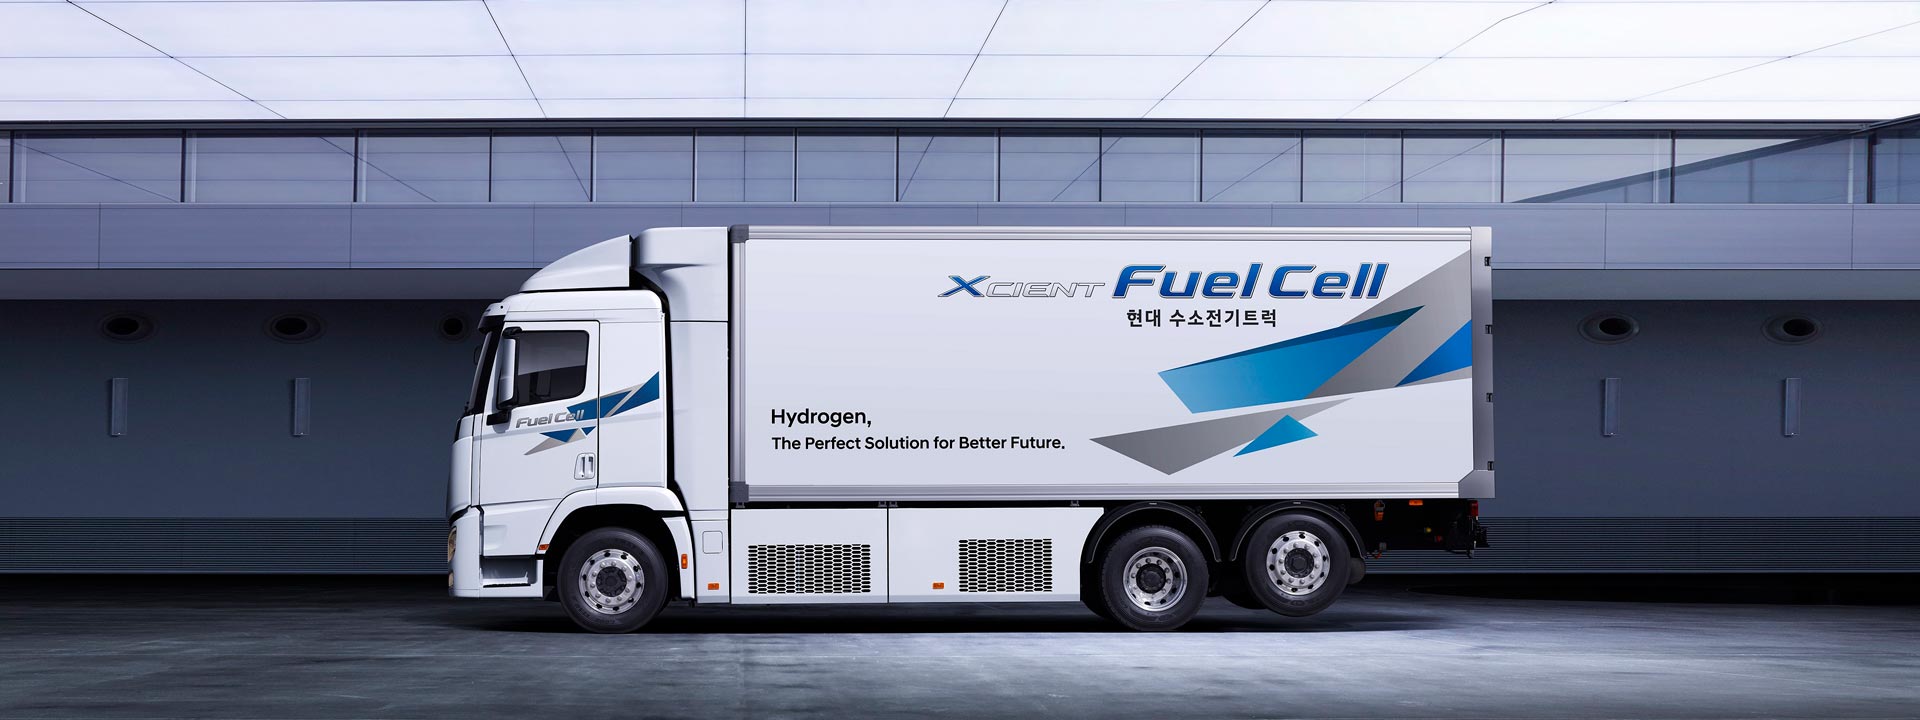 Hyundai_2021_XCIENT-Fuel-Cell-Truck_05_1920x720.jpg